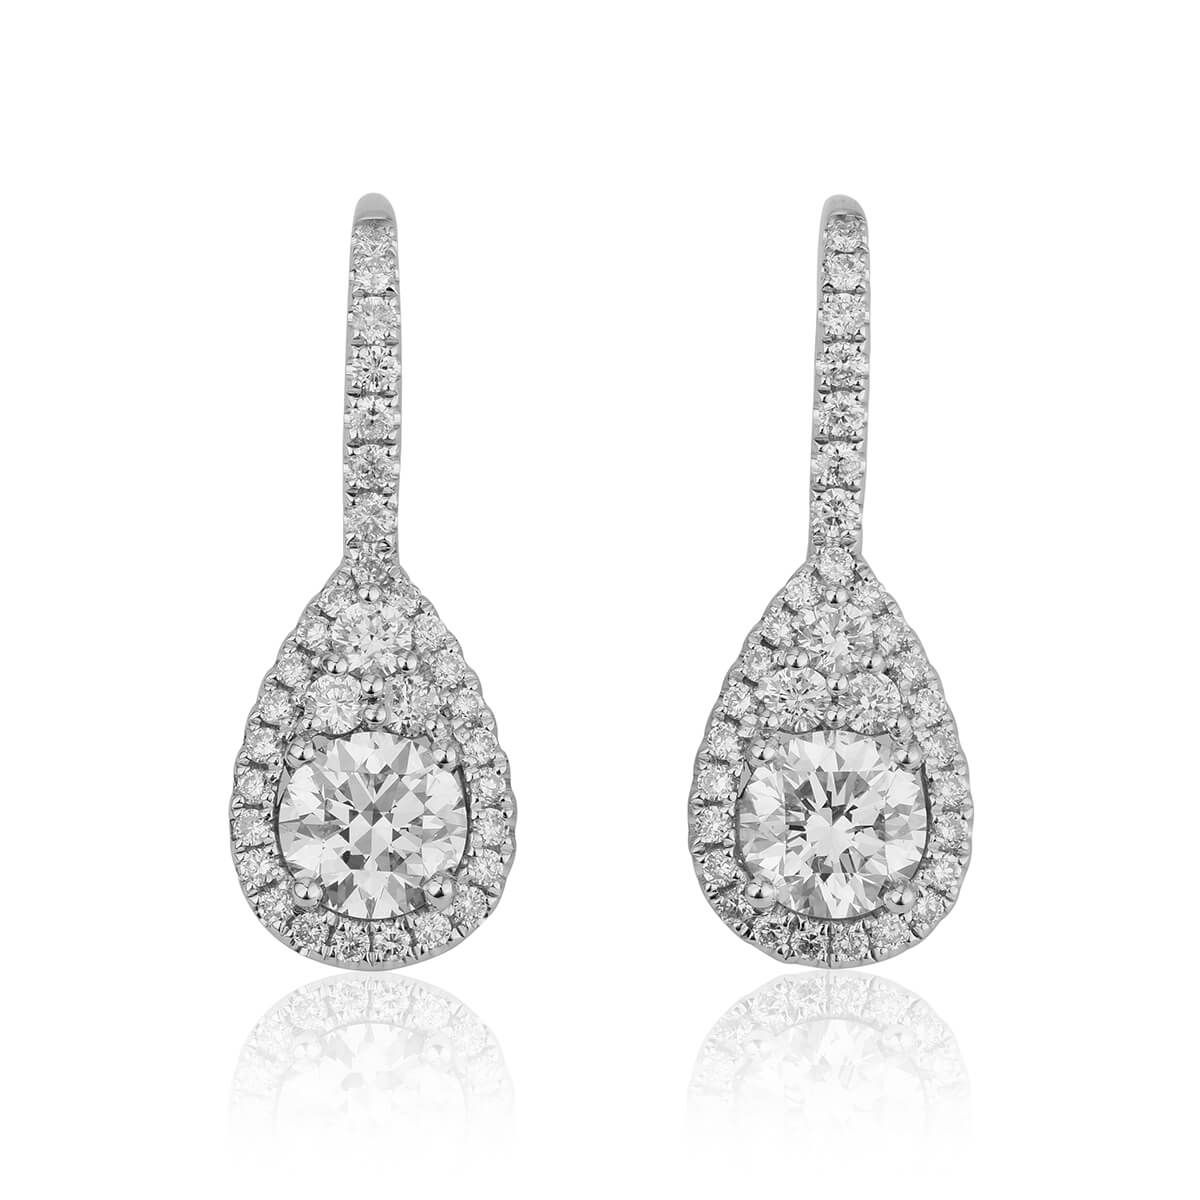  White Diamond Earrings, 1.06 Ct. (1.57 Ct. TW), Round shape, ZSX Certified, 88867069469312